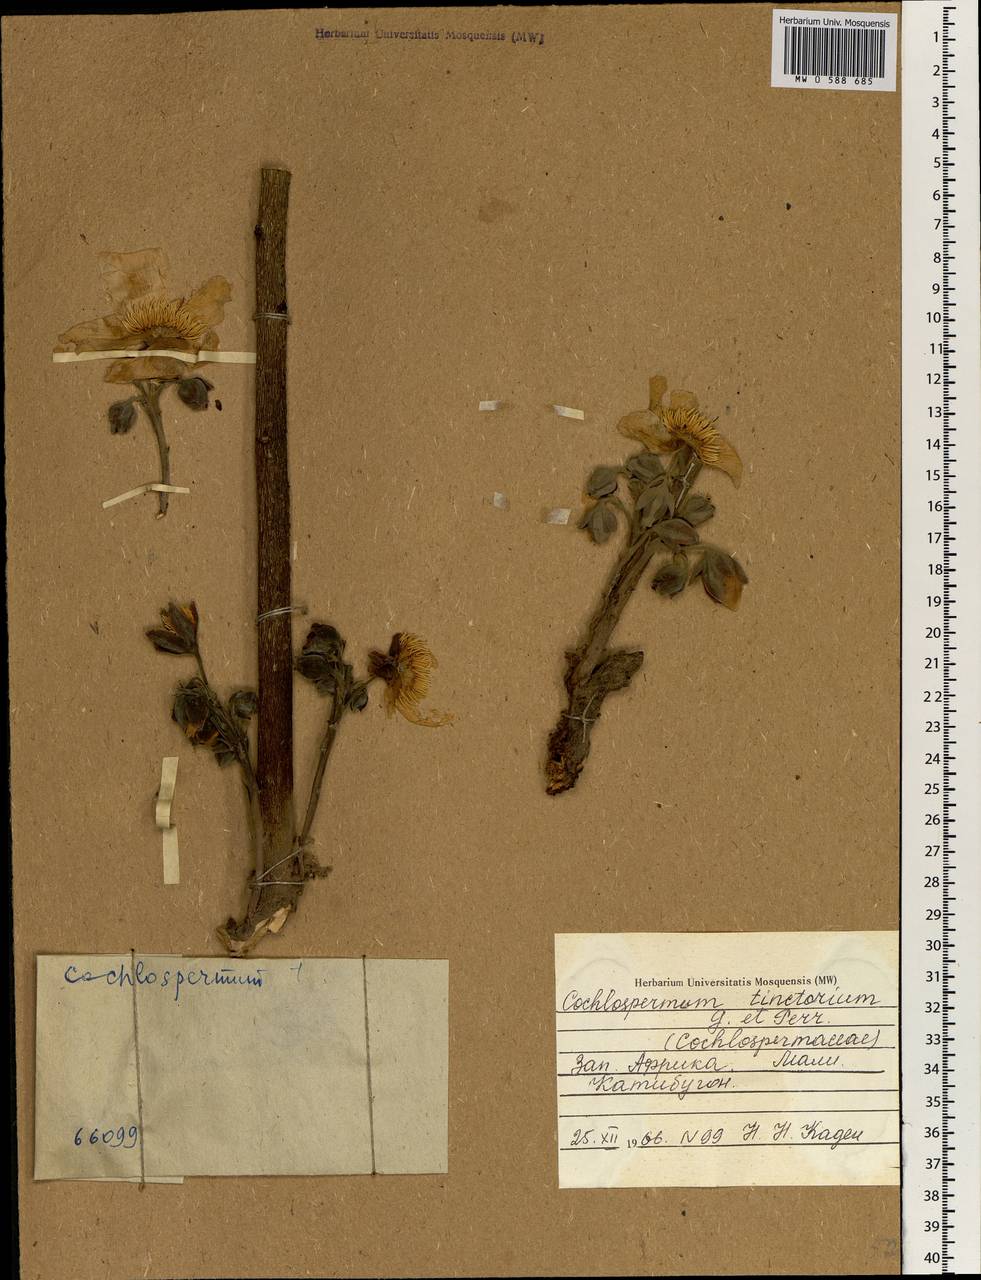 Cochlospermum tinctorium Perr. ex A. Rich., Африка (AFR) (Мали)